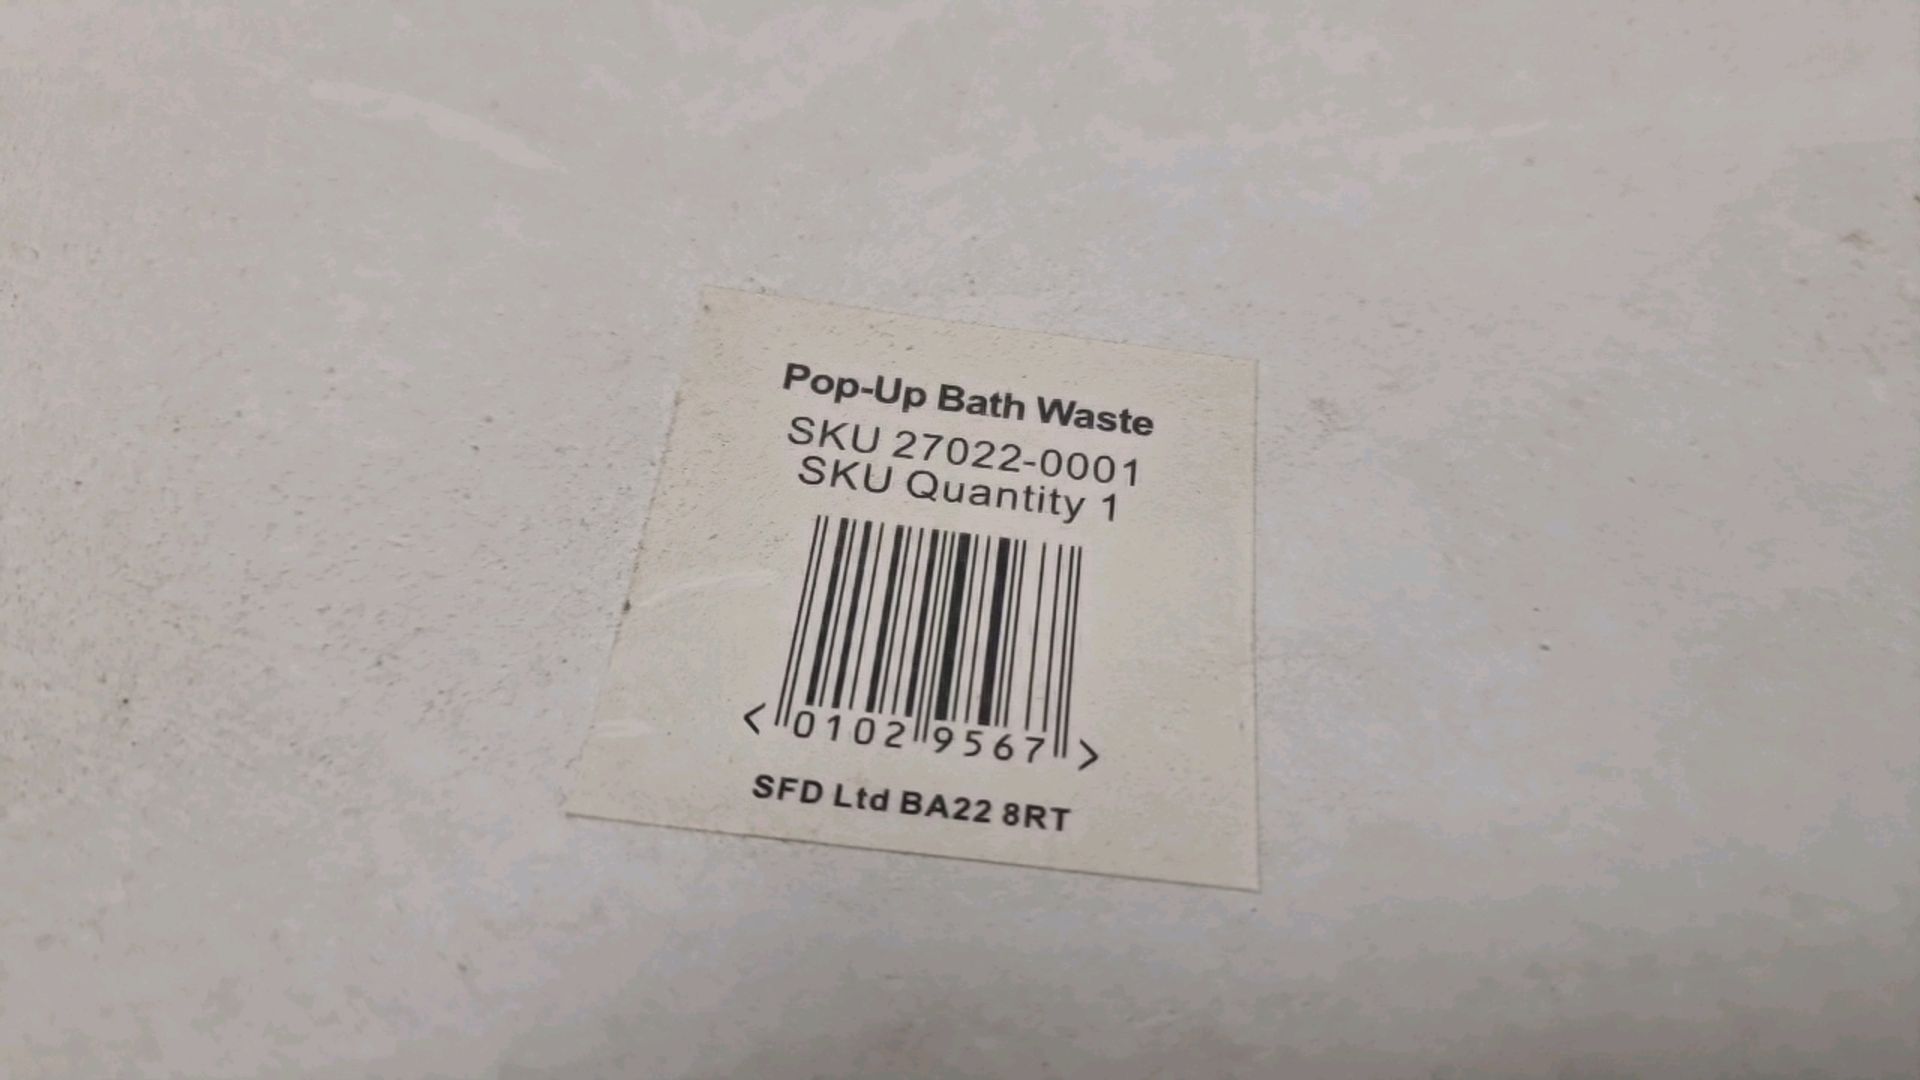 Popup Bath Waste - Image 3 of 4